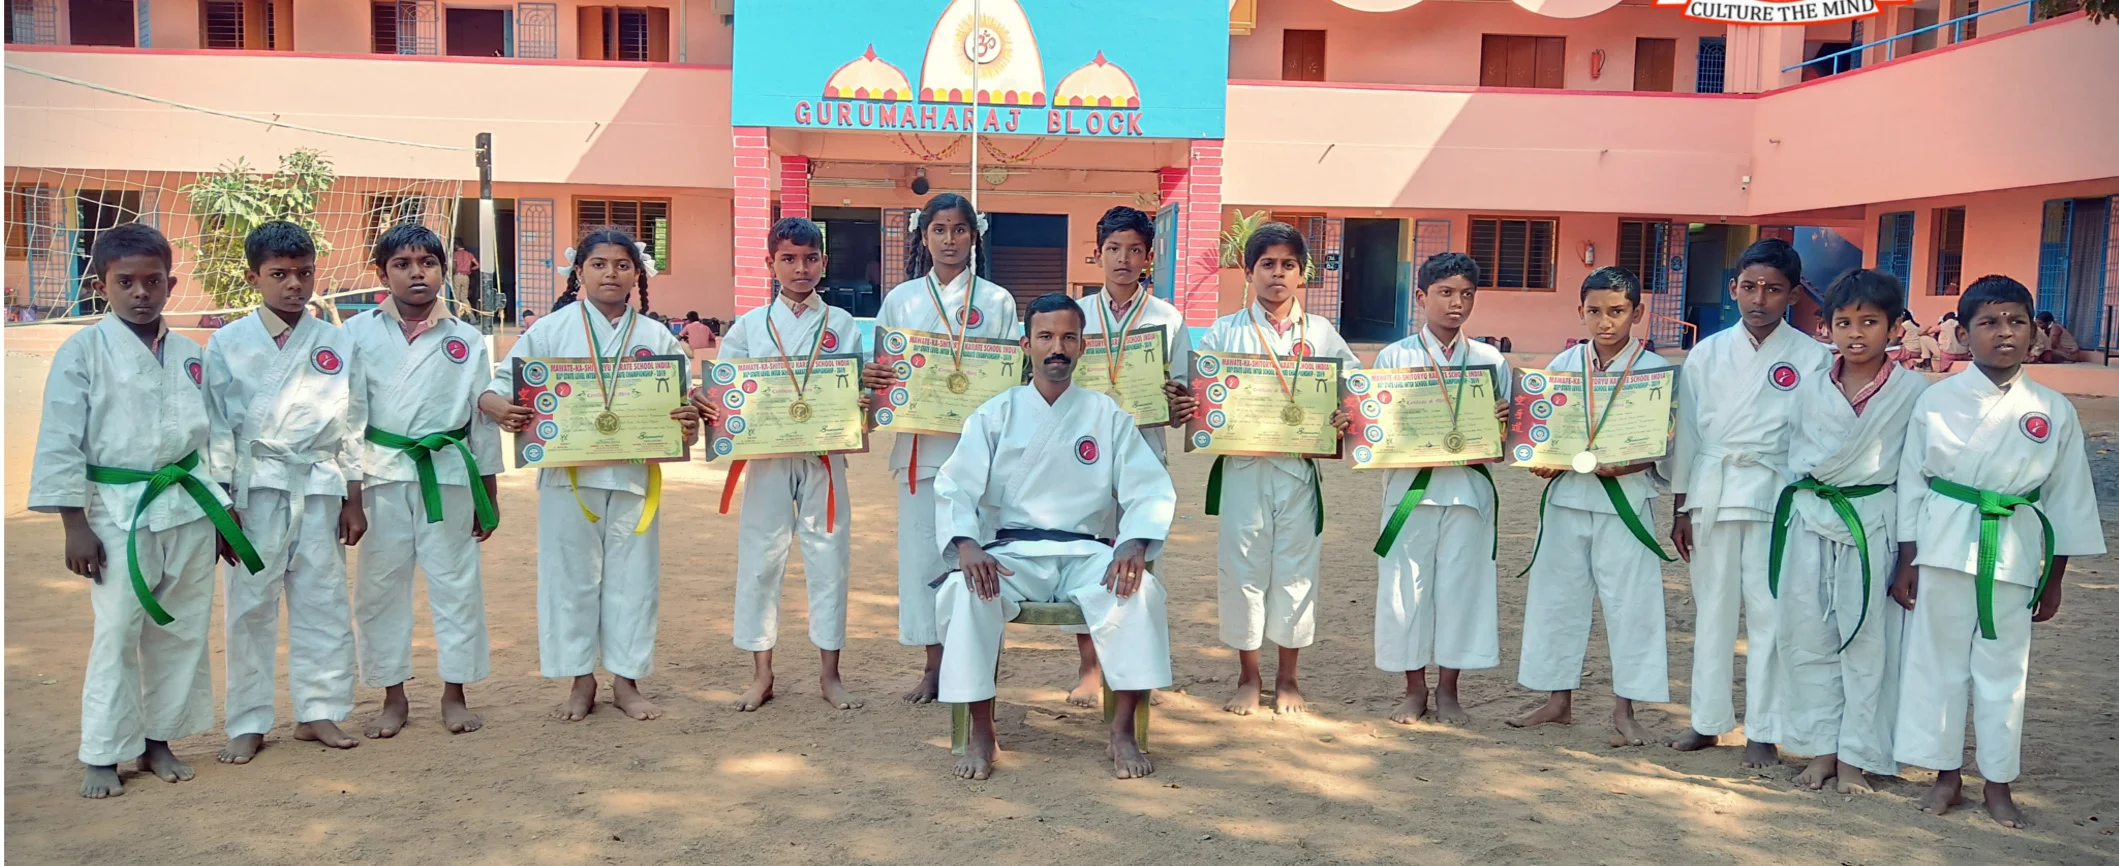 sarada Vidyalaya school in Villupuram